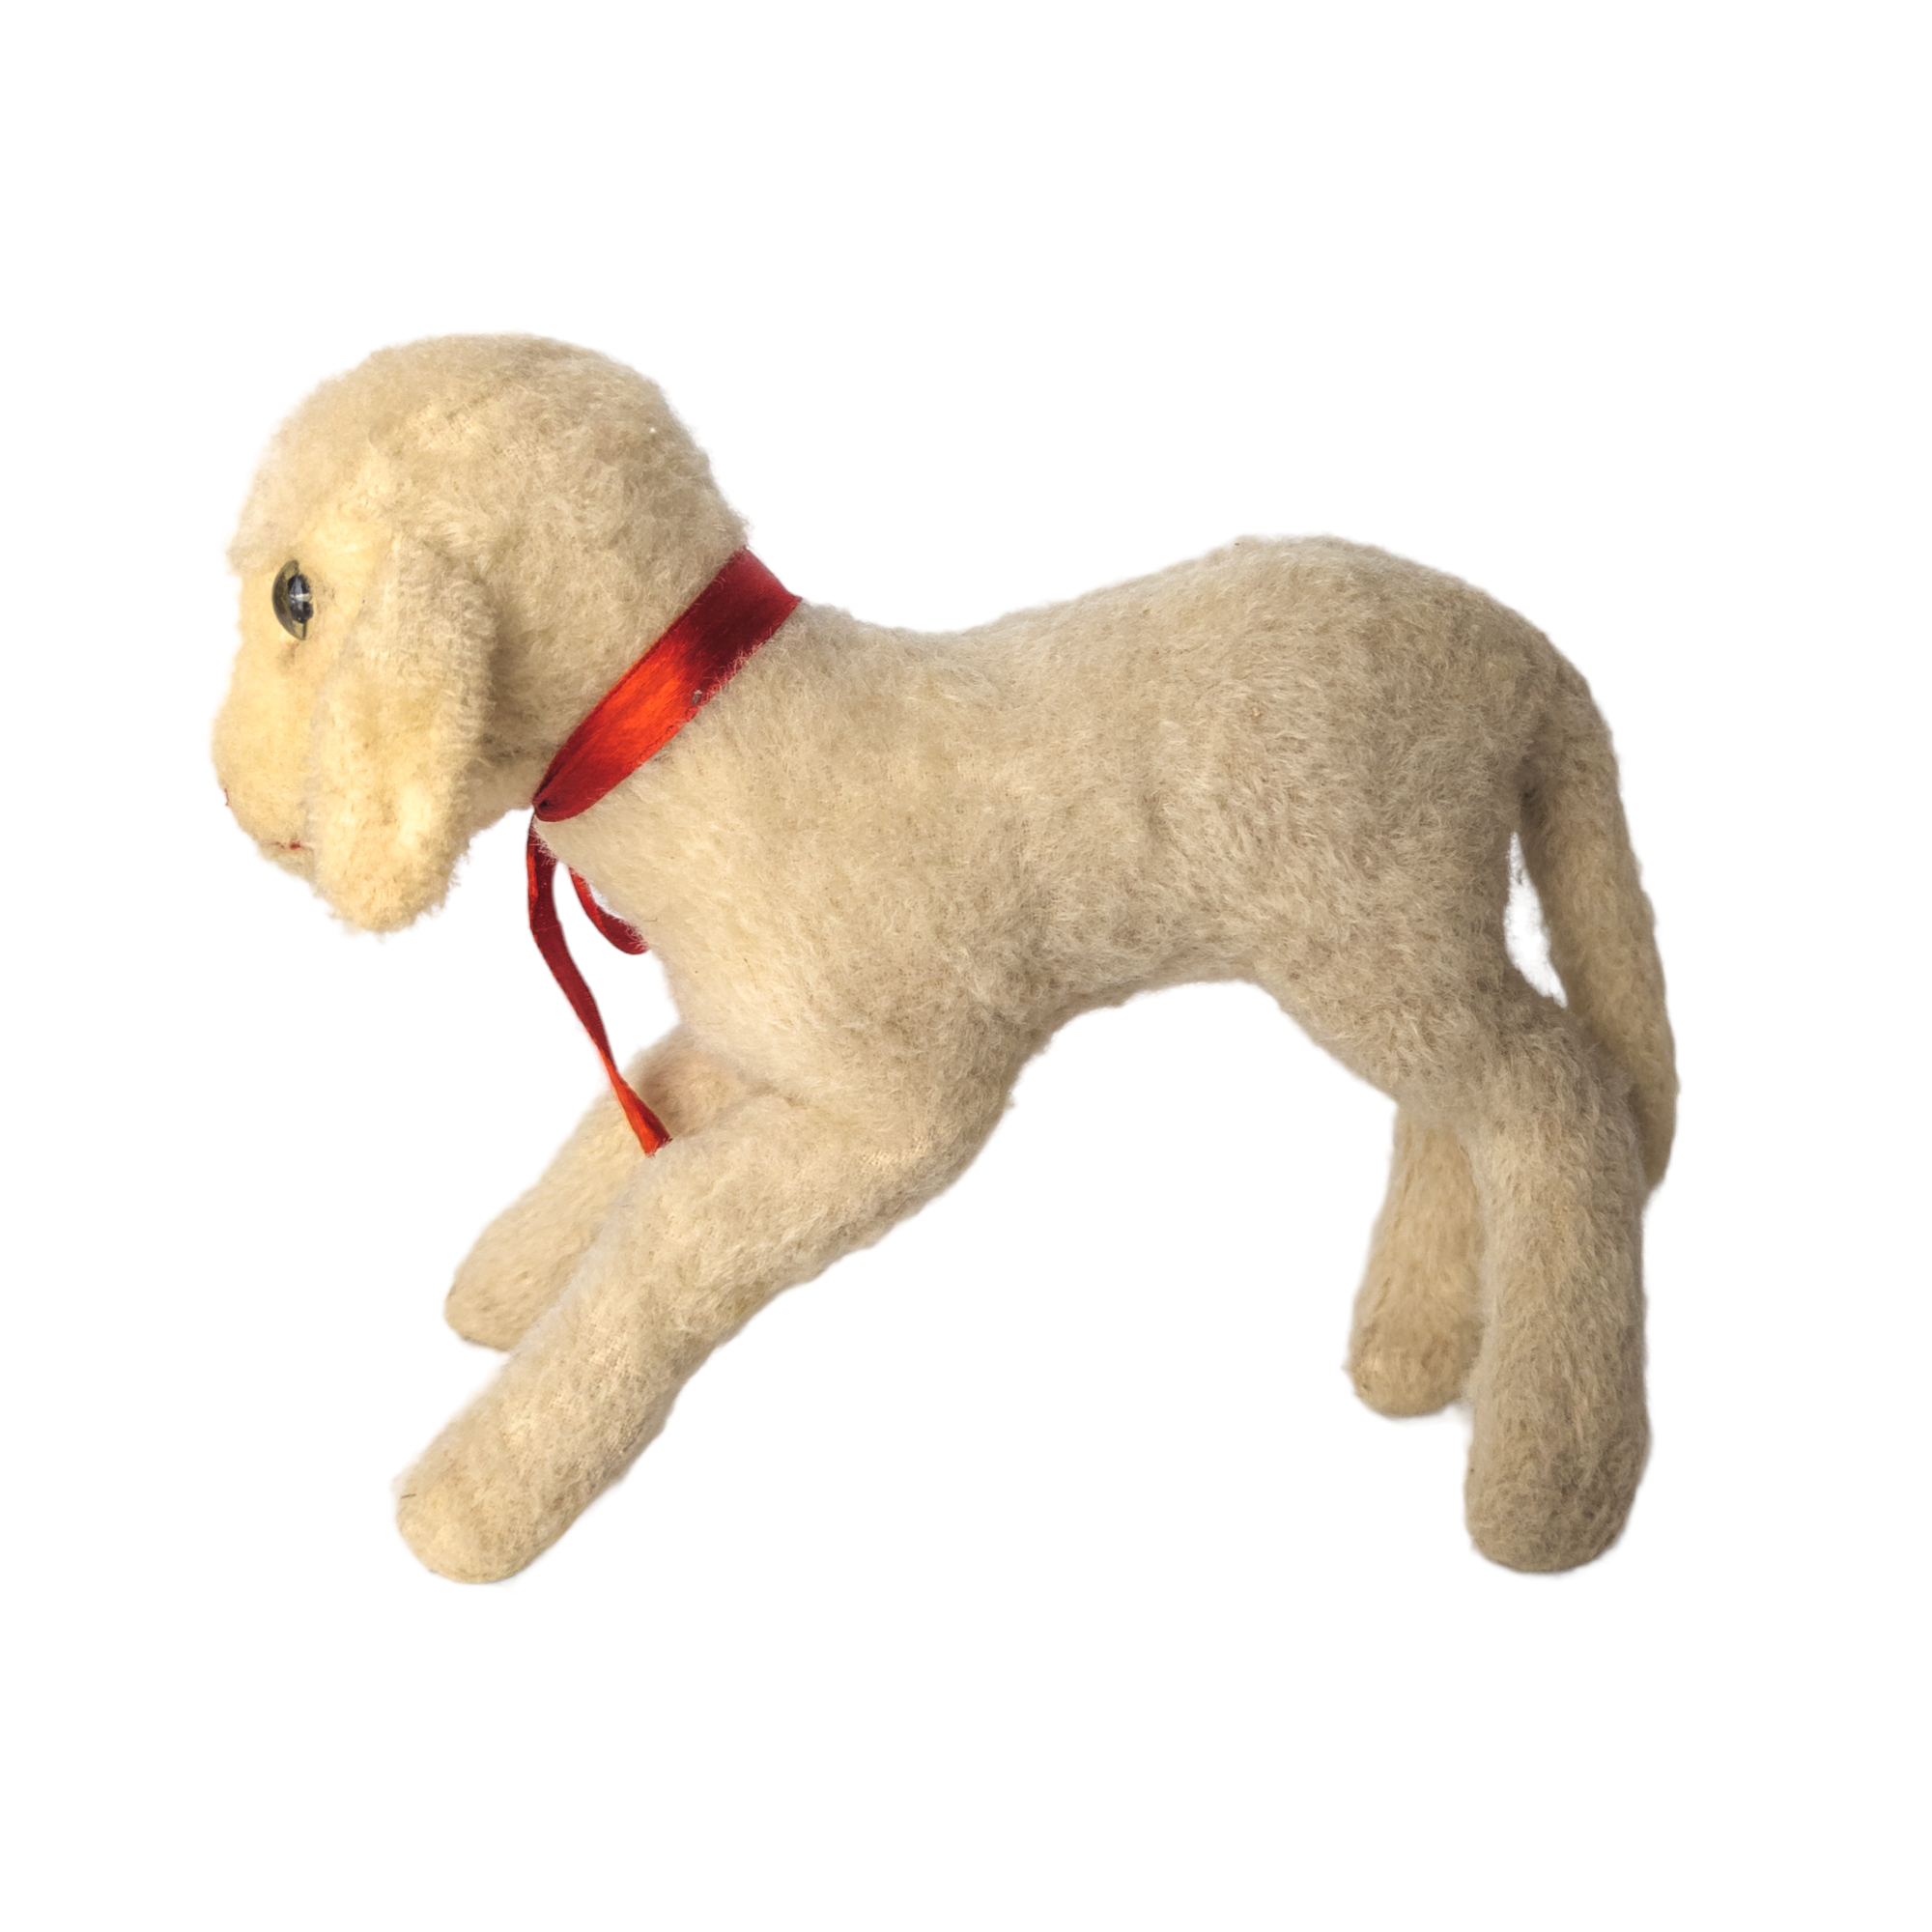 Vintage 1950s Steiff Mohair Plush Lamb Toy